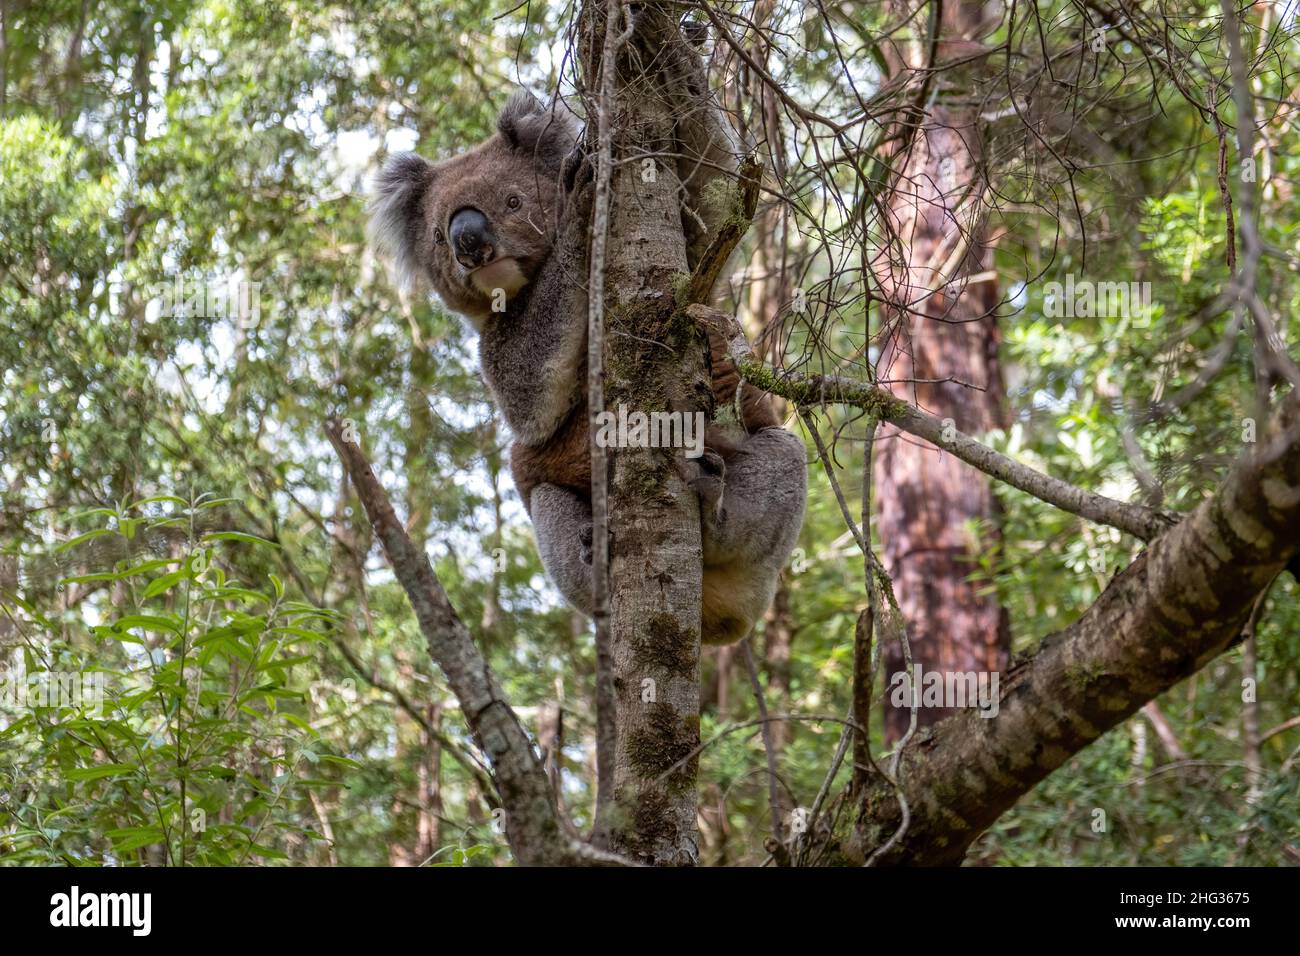 Cute koala bear in native Australian forest Stock Photo